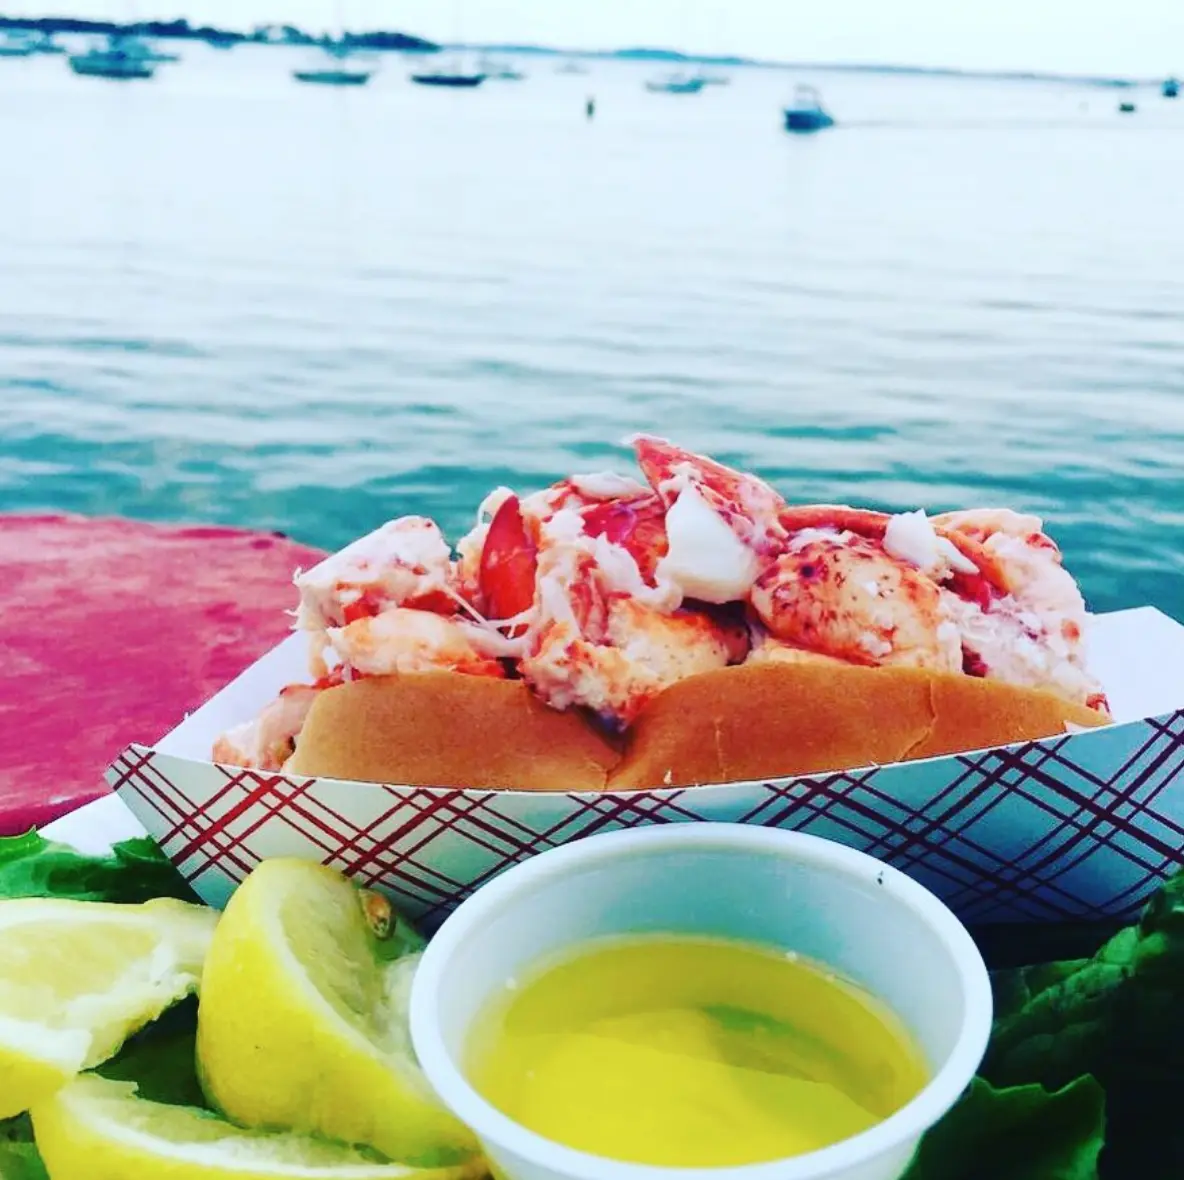 Abbott's Lobster